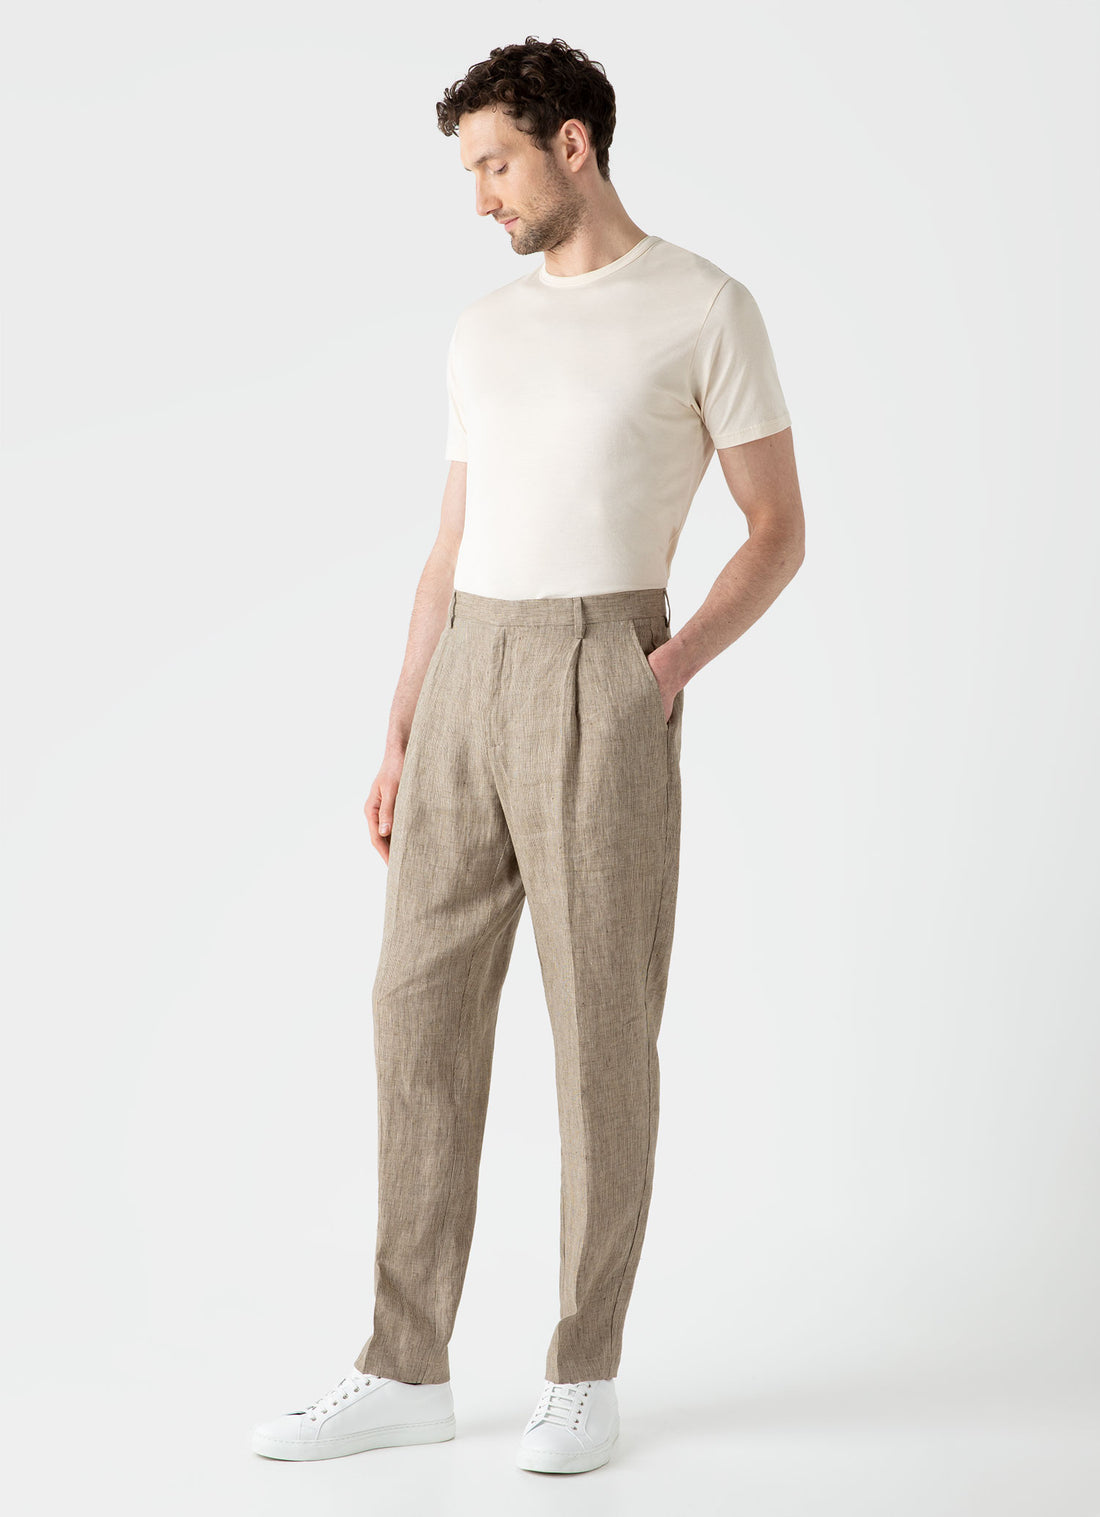 Men's Pleated Linen Trouser in Light Sand Puppytooth